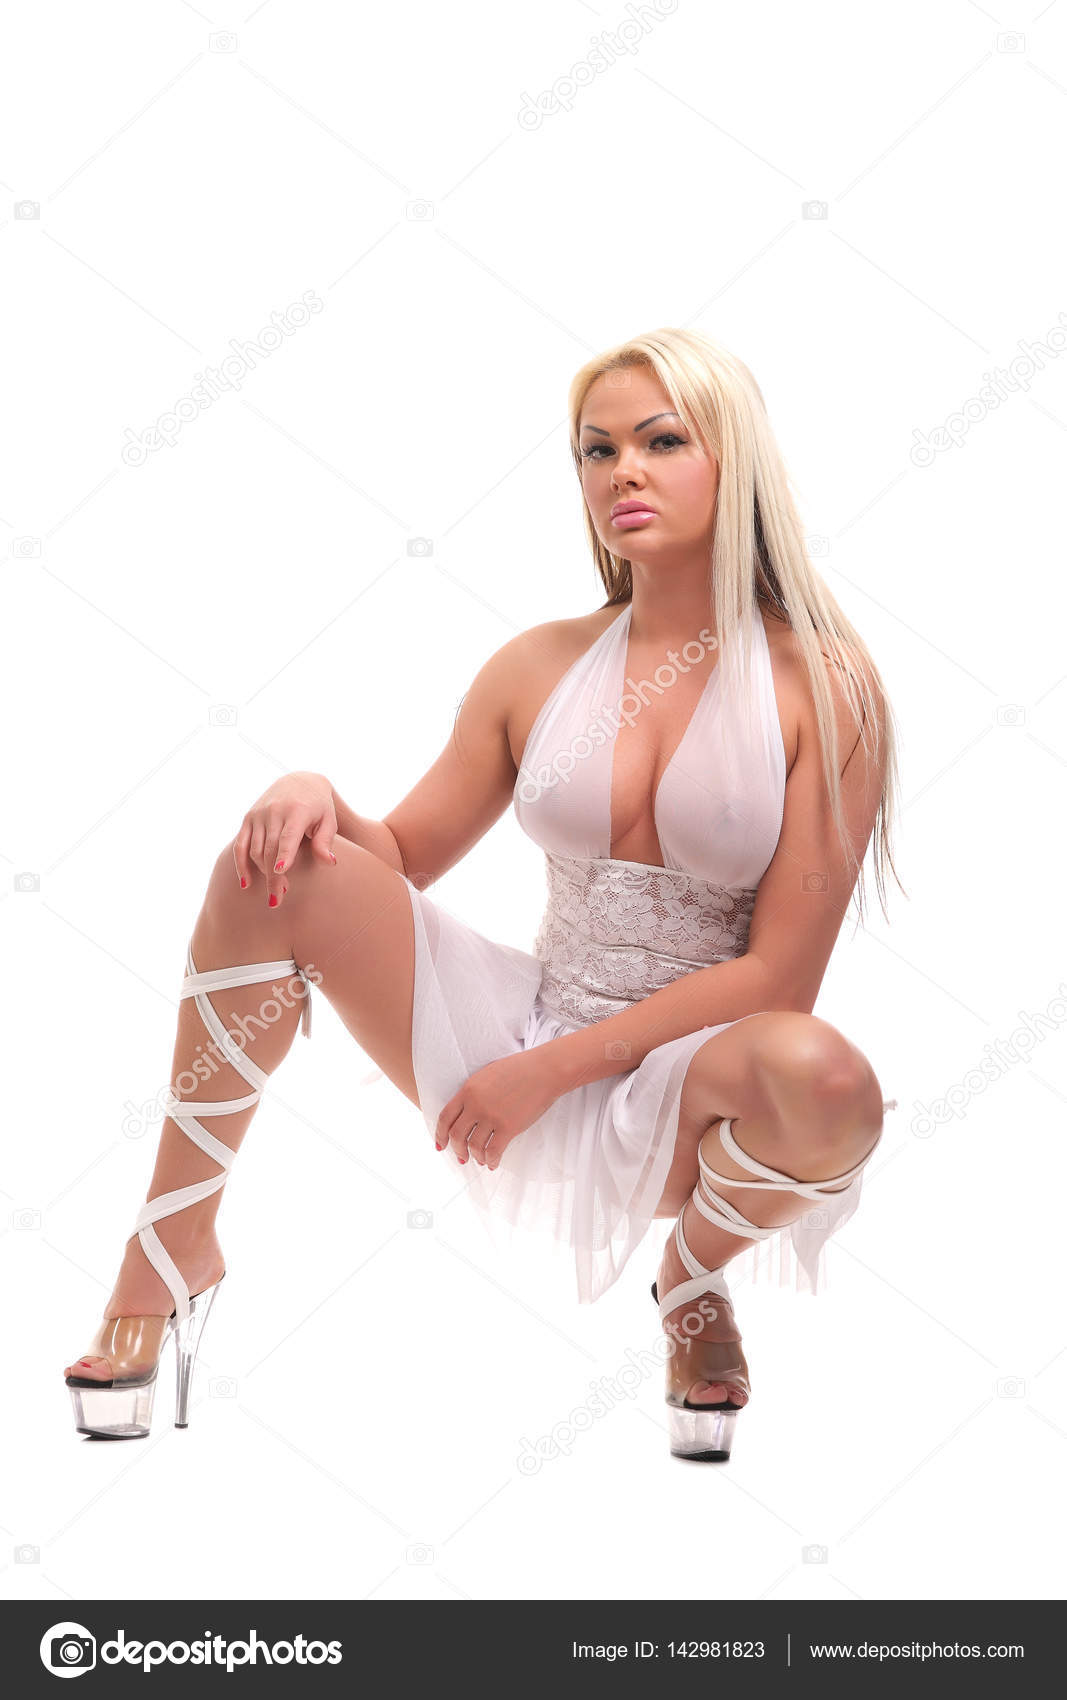 White female stripper